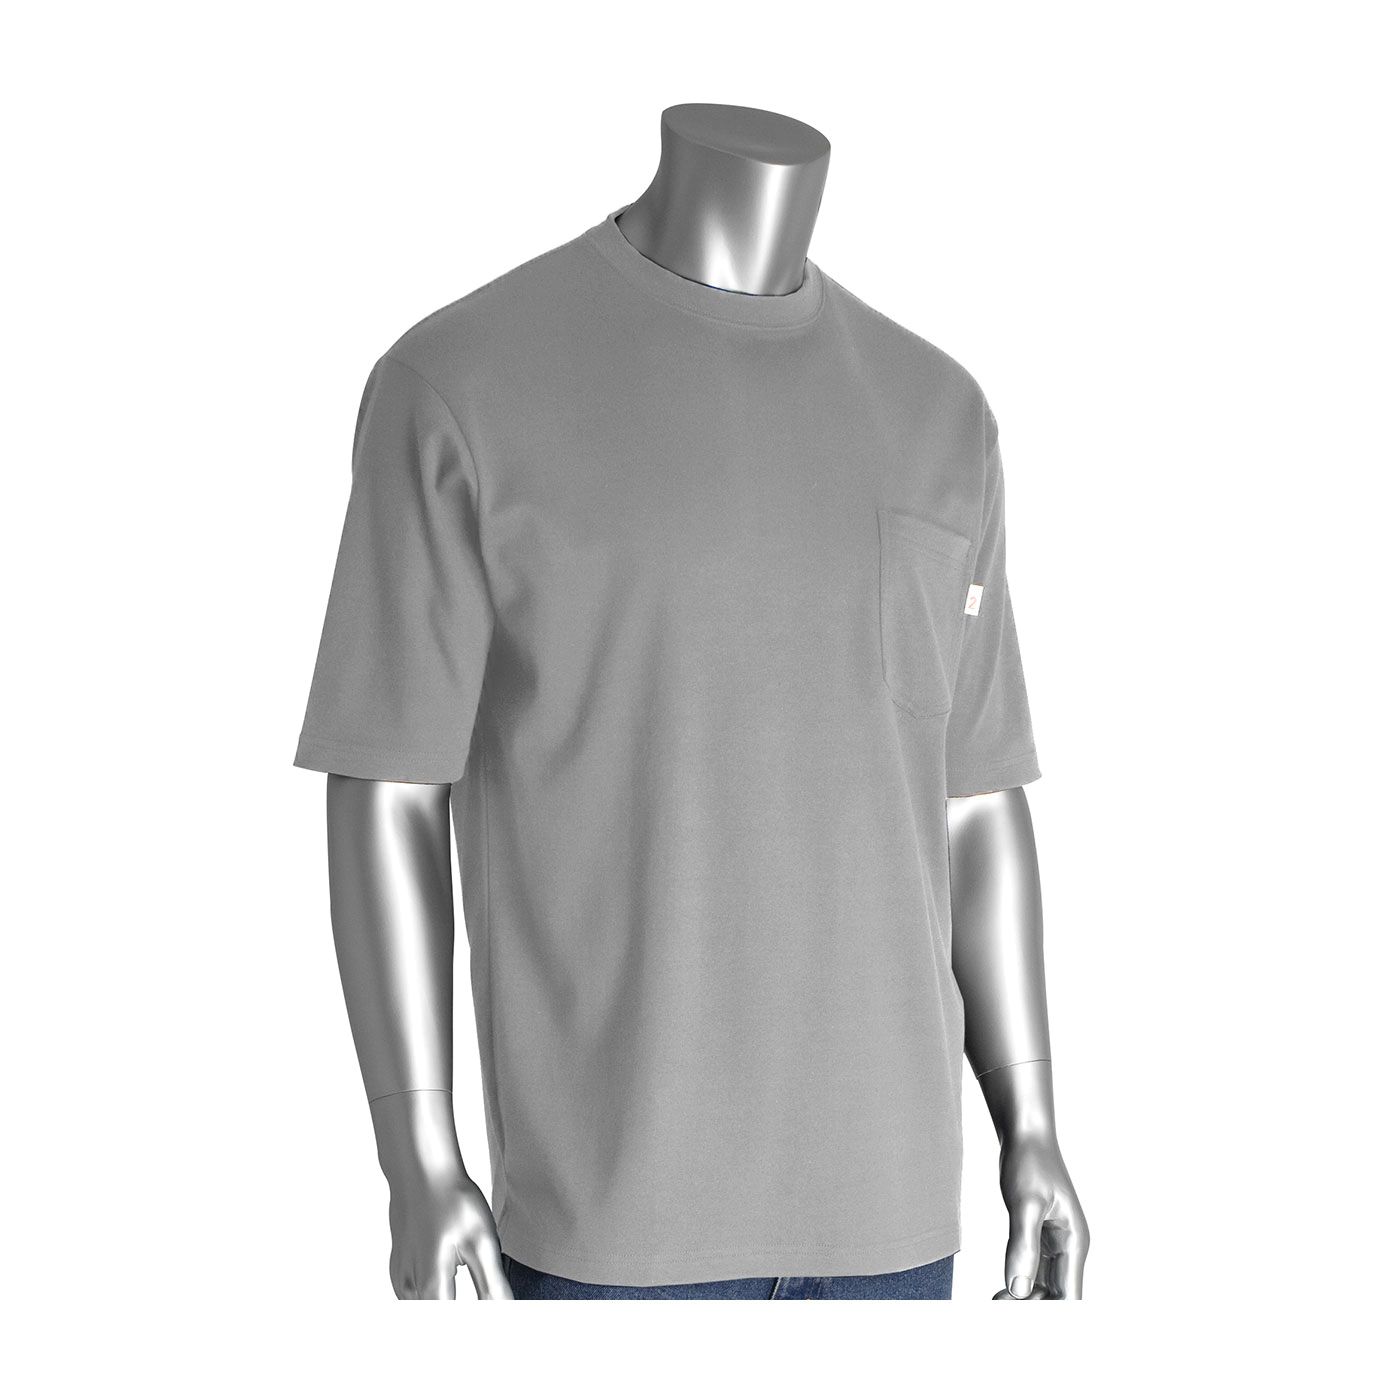 PIP® 385-FRSS-LG/XL Arc and Flame-Resistant Short Sleeve T-Shirt, XL, Light Gray, Cotton Interlock Knit, 32 in L